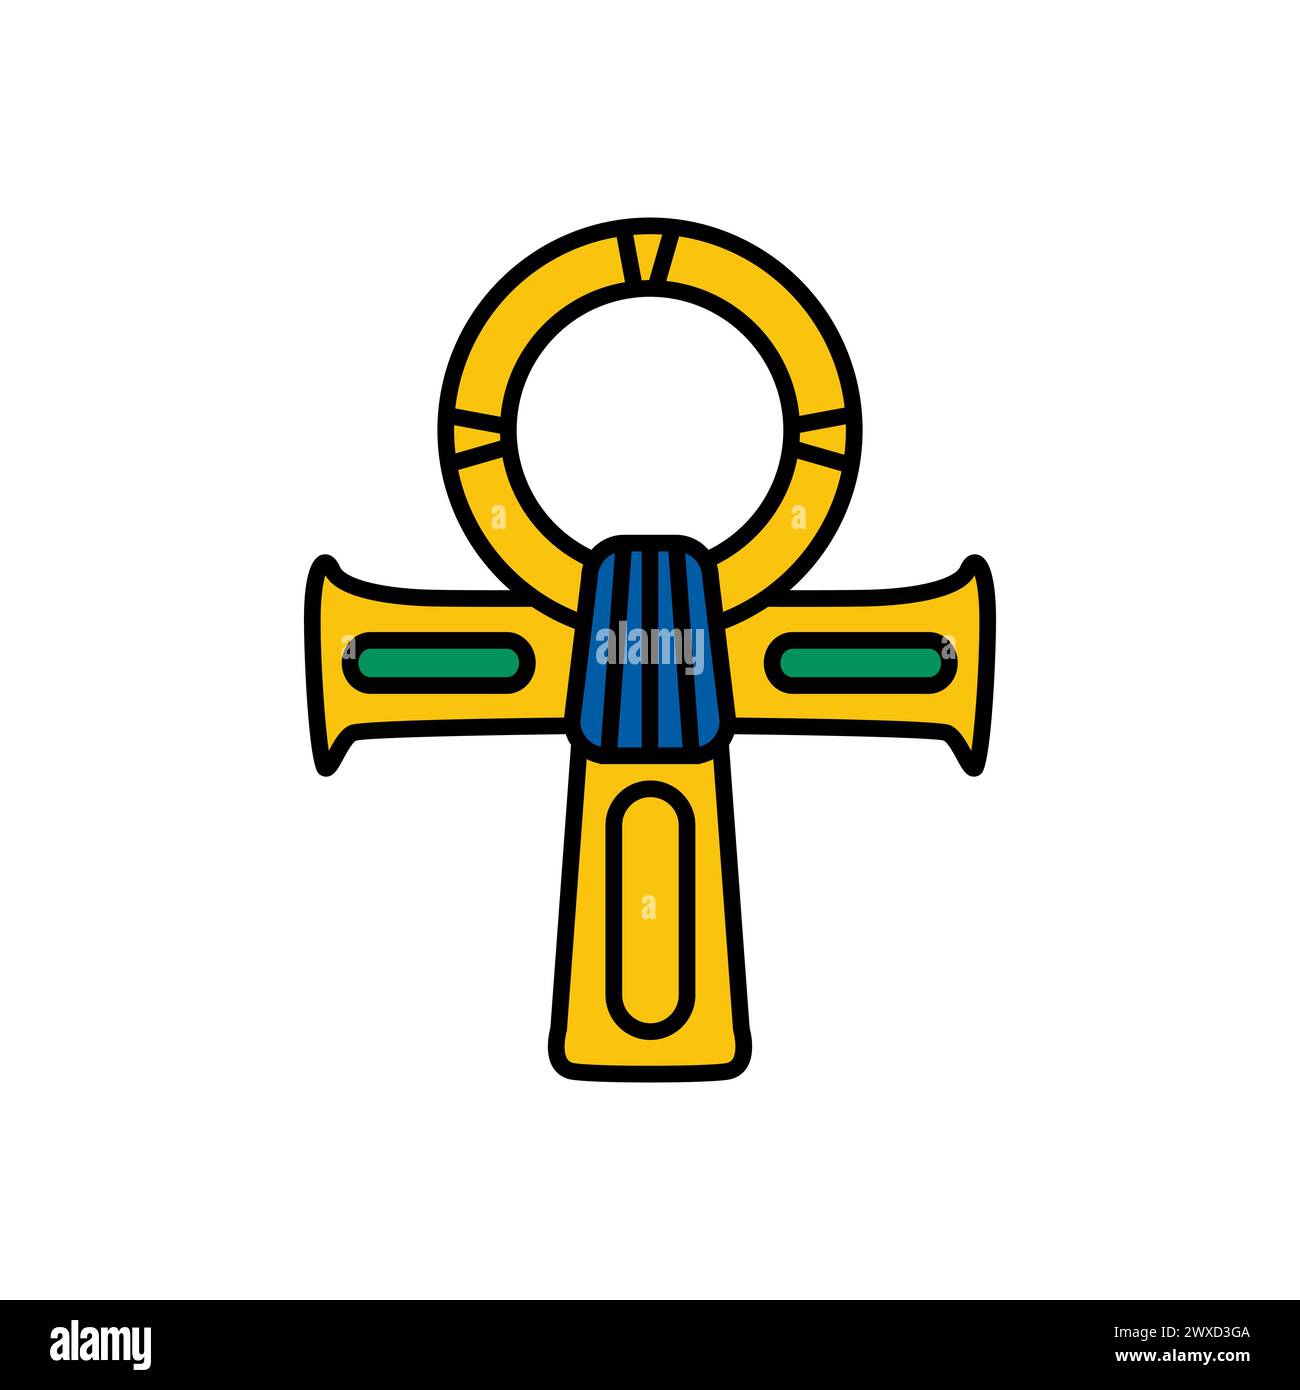 Egyptian cross hieroglyph and symbol, cross Ankh icon Stock Vector